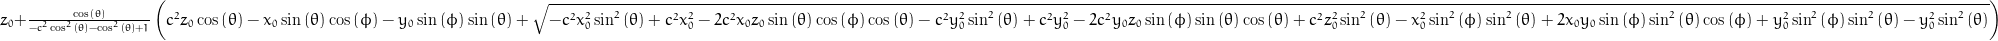 z_{0} + \frac{\cos{\left (\theta \right )}}{- c^{2} \cos^{2}{\left (\theta \right )} - \cos^{2}{\left (\theta \right )} + 1} \left(c^{2} z_{0} \cos{\left (\theta \right )} - x_{0} \sin{\left (\theta \right )} \cos{\left (\phi \right )} - y_{0} \sin{\left (\phi \right )} \sin{\left (\theta \right )} + \sqrt{- c^{2} x_{0}^{2} \sin^{2}{\left (\theta \right )} + c^{2} x_{0}^{2} - 2 c^{2} x_{0} z_{0} \sin{\left (\theta \right )} \cos{\left (\phi \right )} \cos{\left (\theta \right )} - c^{2} y_{0}^{2} \sin^{2}{\left (\theta \right )} + c^{2} y_{0}^{2} - 2 c^{2} y_{0} z_{0} \sin{\left (\phi \right )} \sin{\left (\theta \right )} \cos{\left (\theta \right )} + c^{2} z_{0}^{2} \sin^{2}{\left (\theta \right )} - x_{0}^{2} \sin^{2}{\left (\phi \right )} \sin^{2}{\left (\theta \right )} + 2 x_{0} y_{0} \sin{\left (\phi \right )} \sin^{2}{\left (\theta \right )} \cos{\left (\phi \right )} + y_{0}^{2} \sin^{2}{\left (\phi \right )} \sin^{2}{\left (\theta \right )} - y_{0}^{2} \sin^{2}{\left (\theta \right )}}\right)